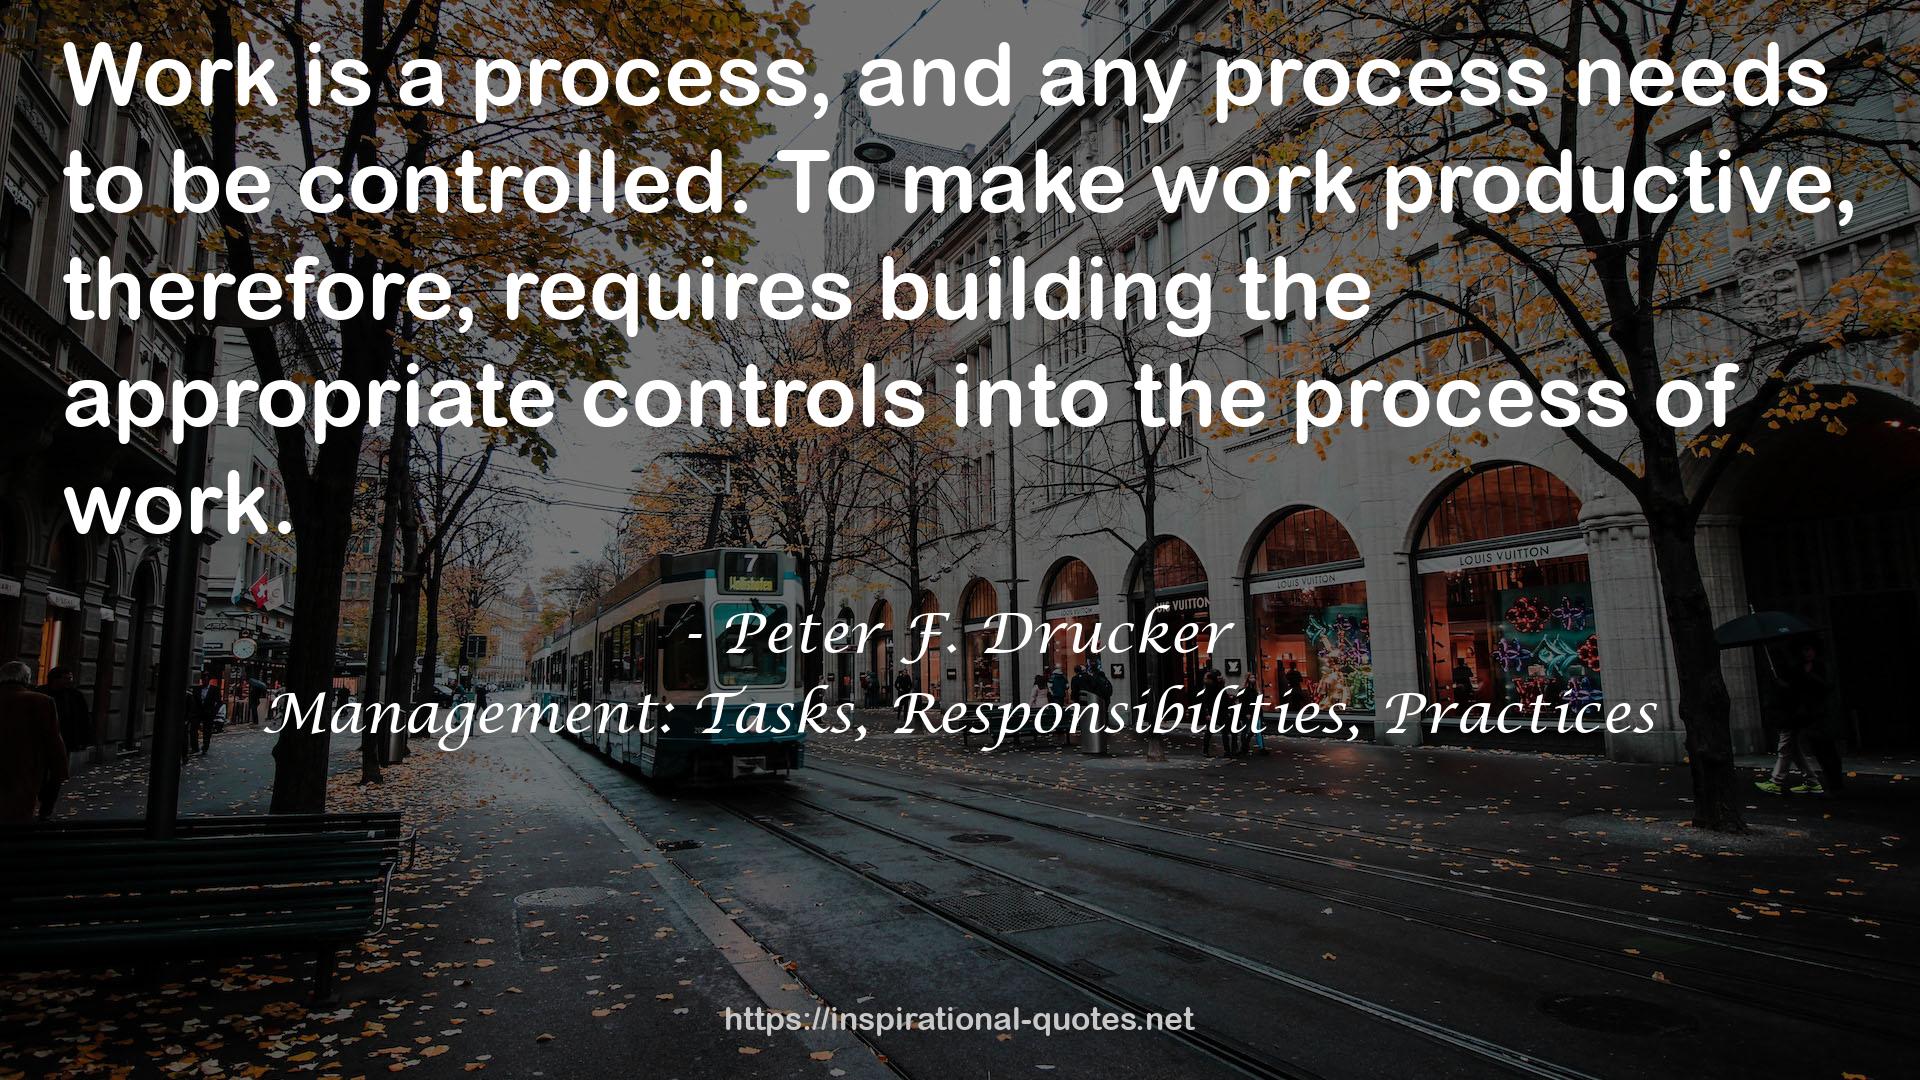 Management: Tasks, Responsibilities, Practices QUOTES